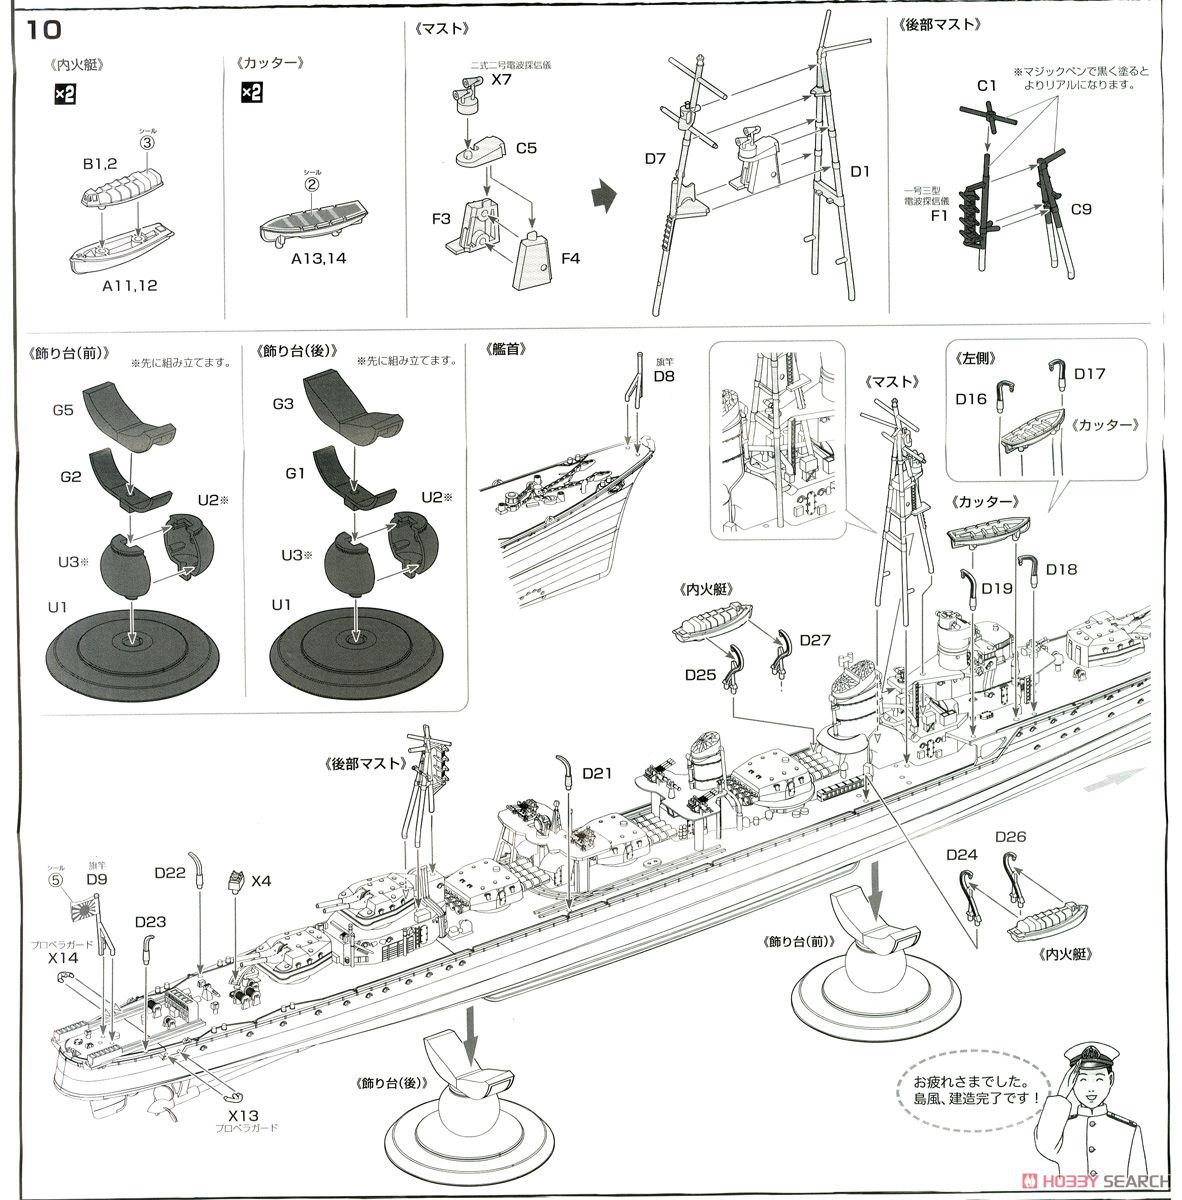 日本海軍駆逐艦 島風 最終時/昭和19年 (プラモデル) 設計図8